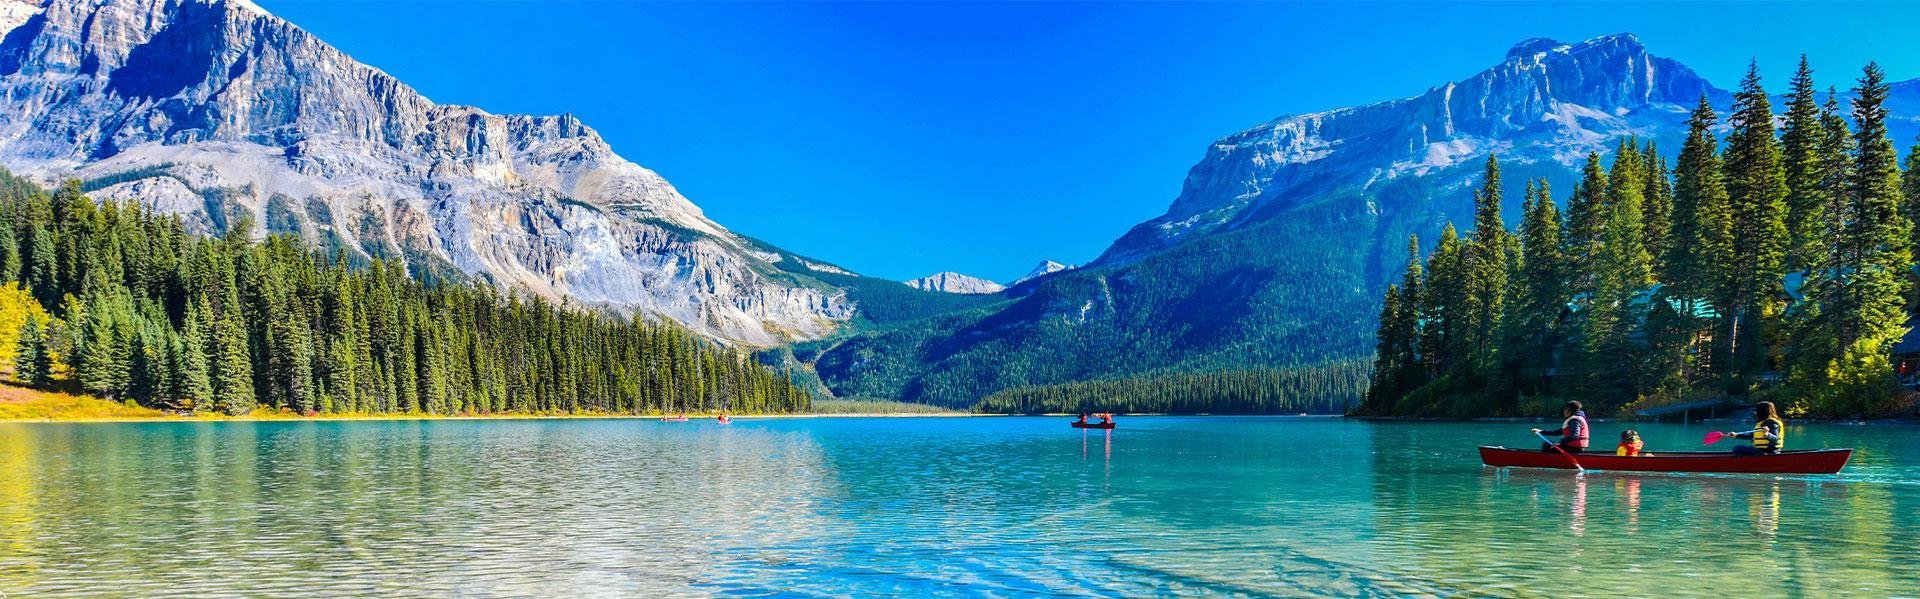 Emerald Lake in Yoho National Park  Canada